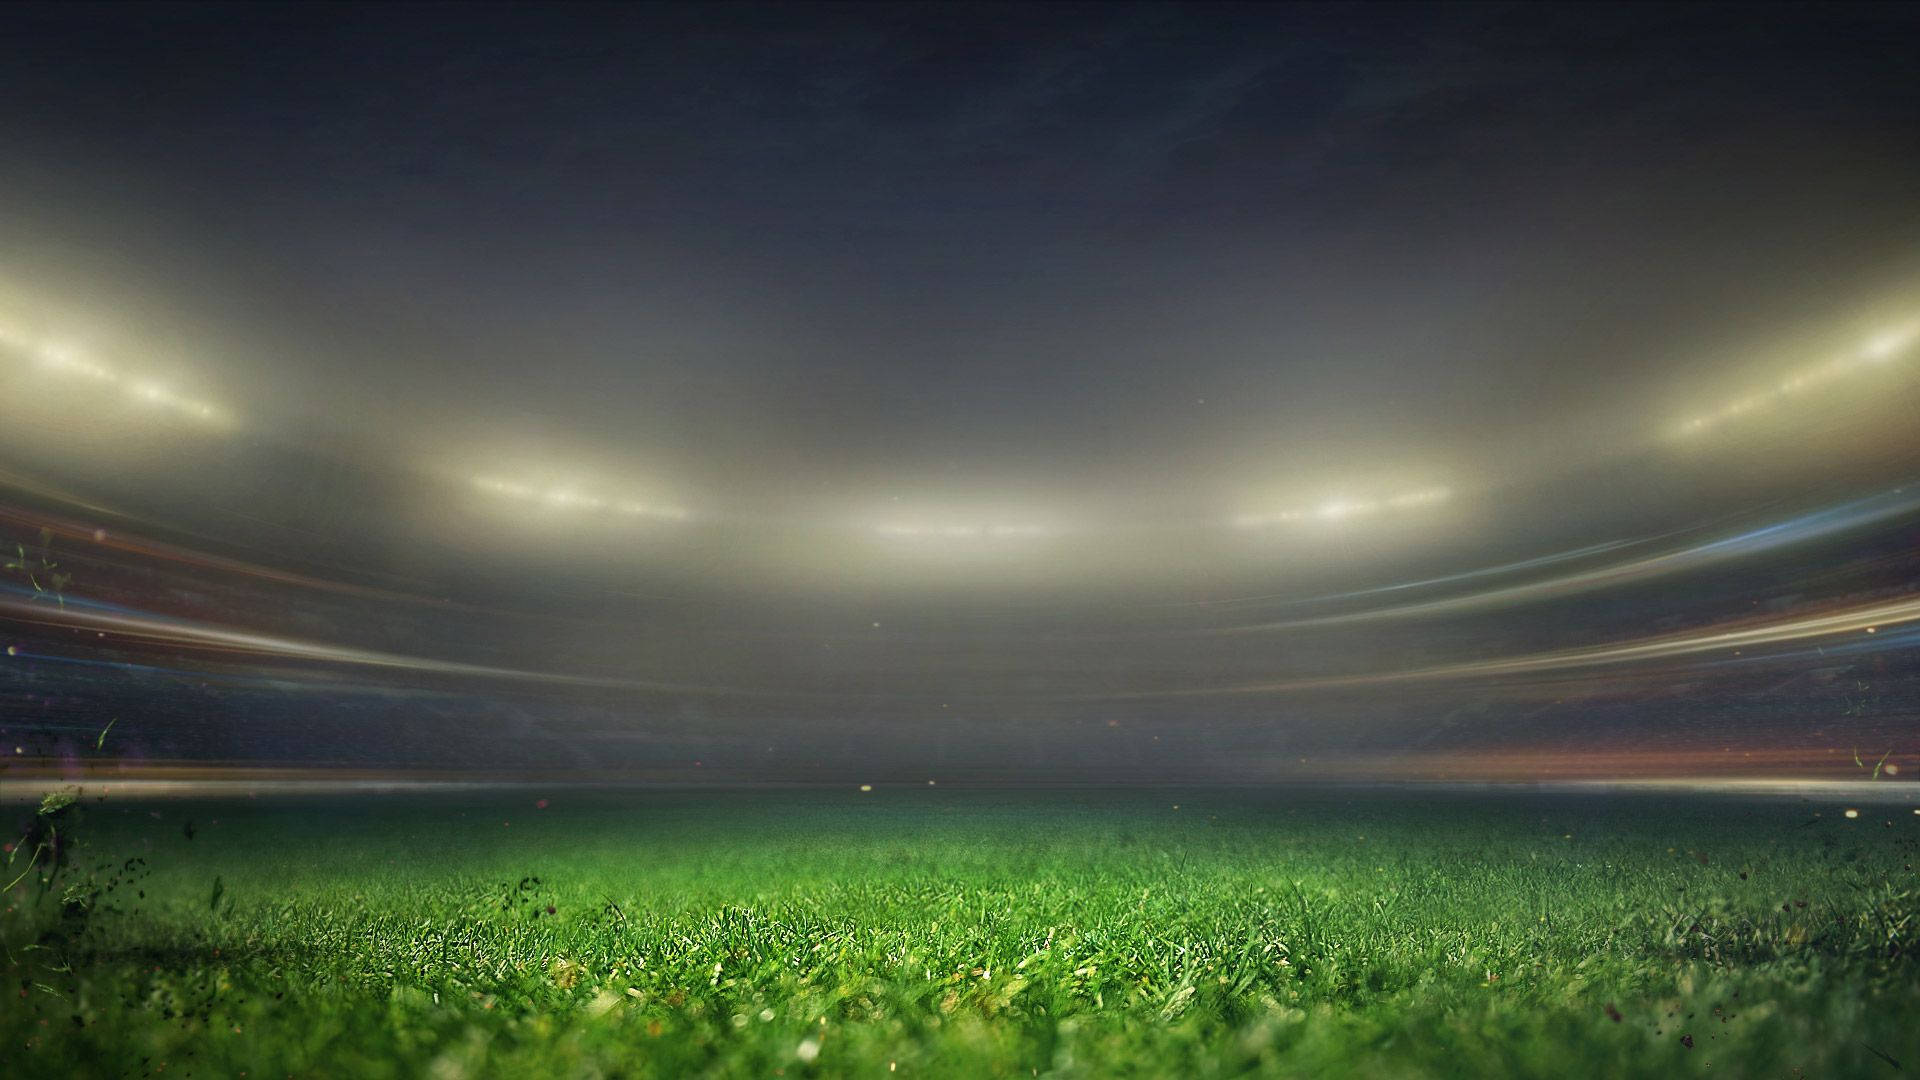 Gorgeous Landscape Of FIFA 21 Green Football Field Wallpaper